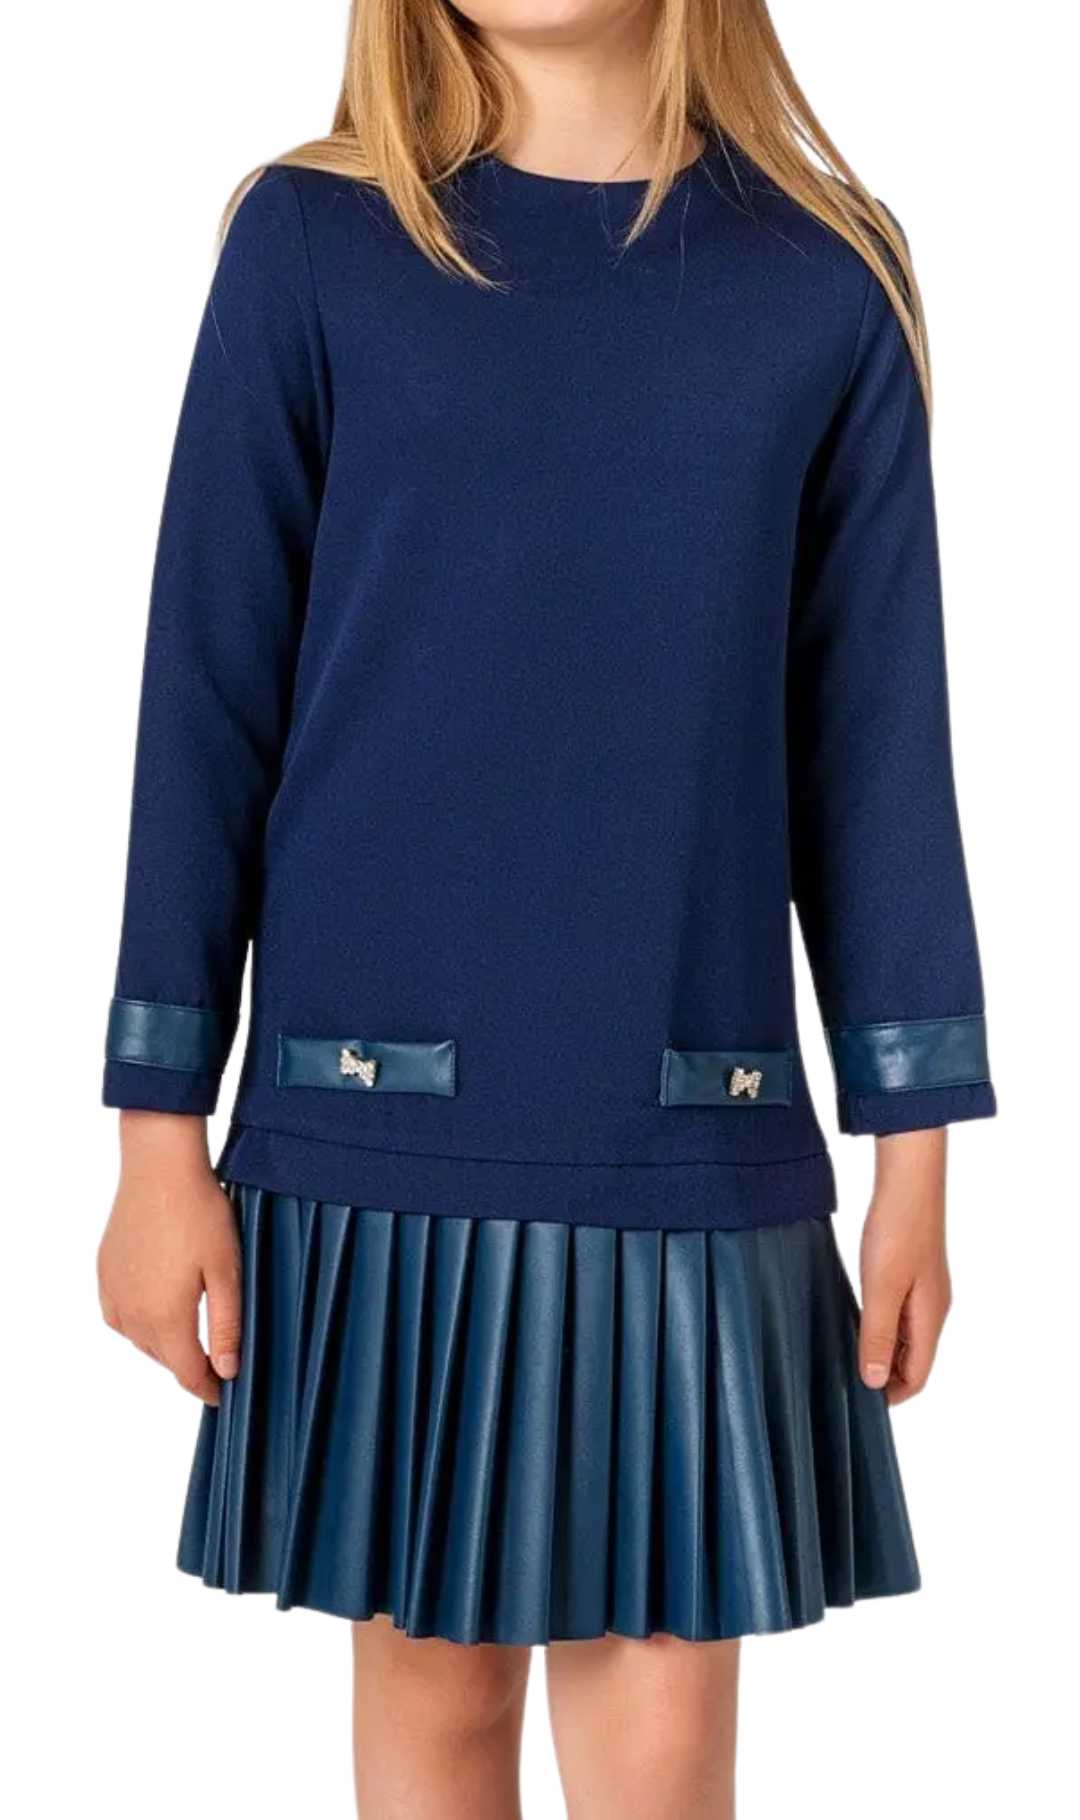 InCity Girls Tween 7-14 Years Navy Leather Skirt Long Sleeve Fashion Andover Dress